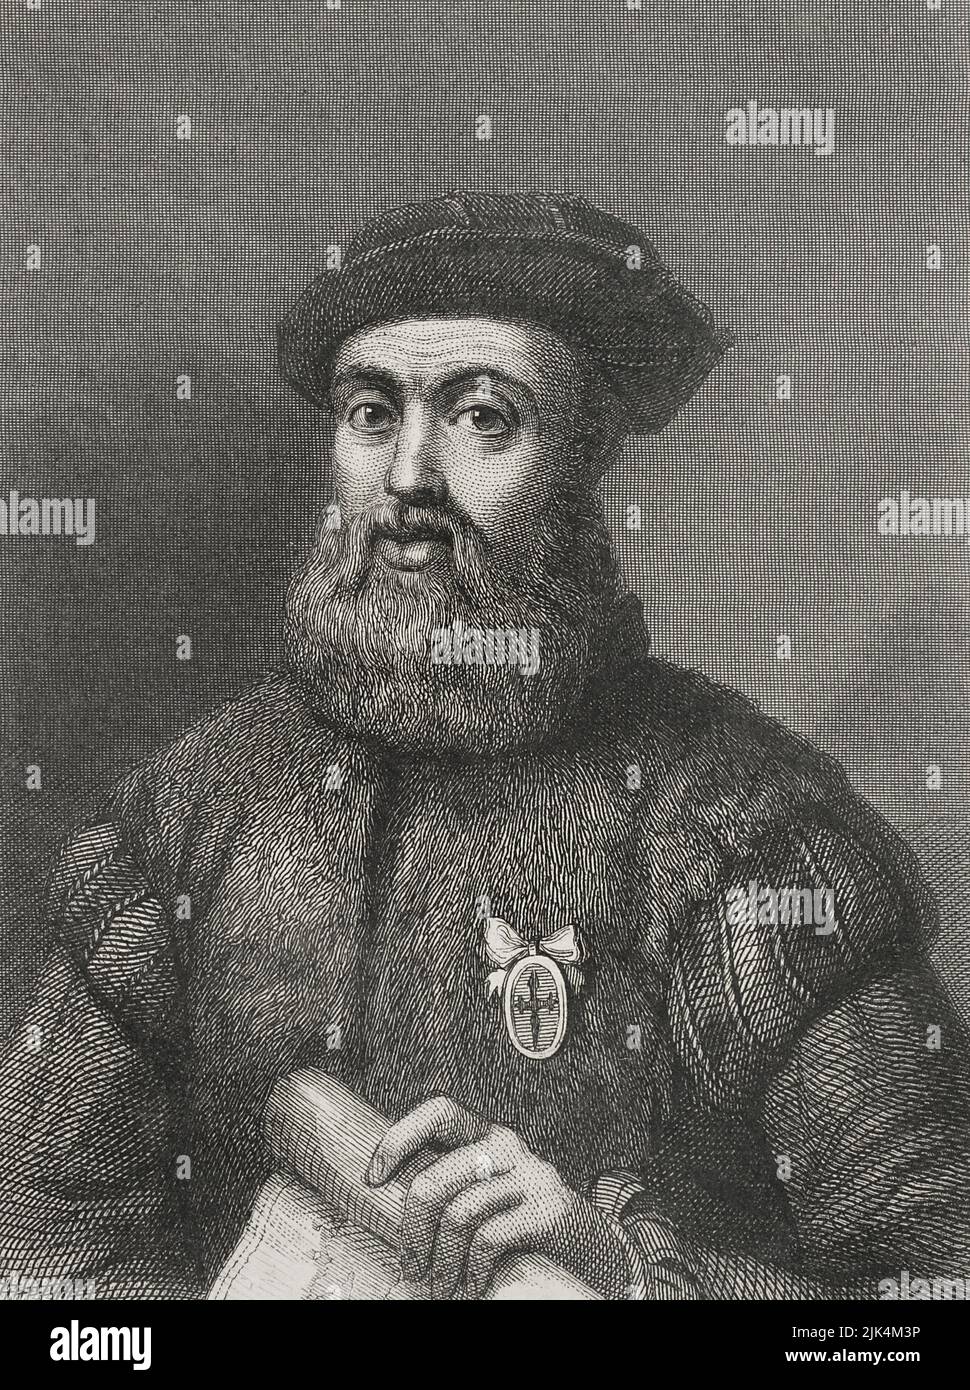 Ferdinand Magellan (1480-1521). Portuguese explorer. Portrait. Engraving by Geoffroy. 'Historia Universal', by César Cantú. Volume IV, 1856. Stock Photo